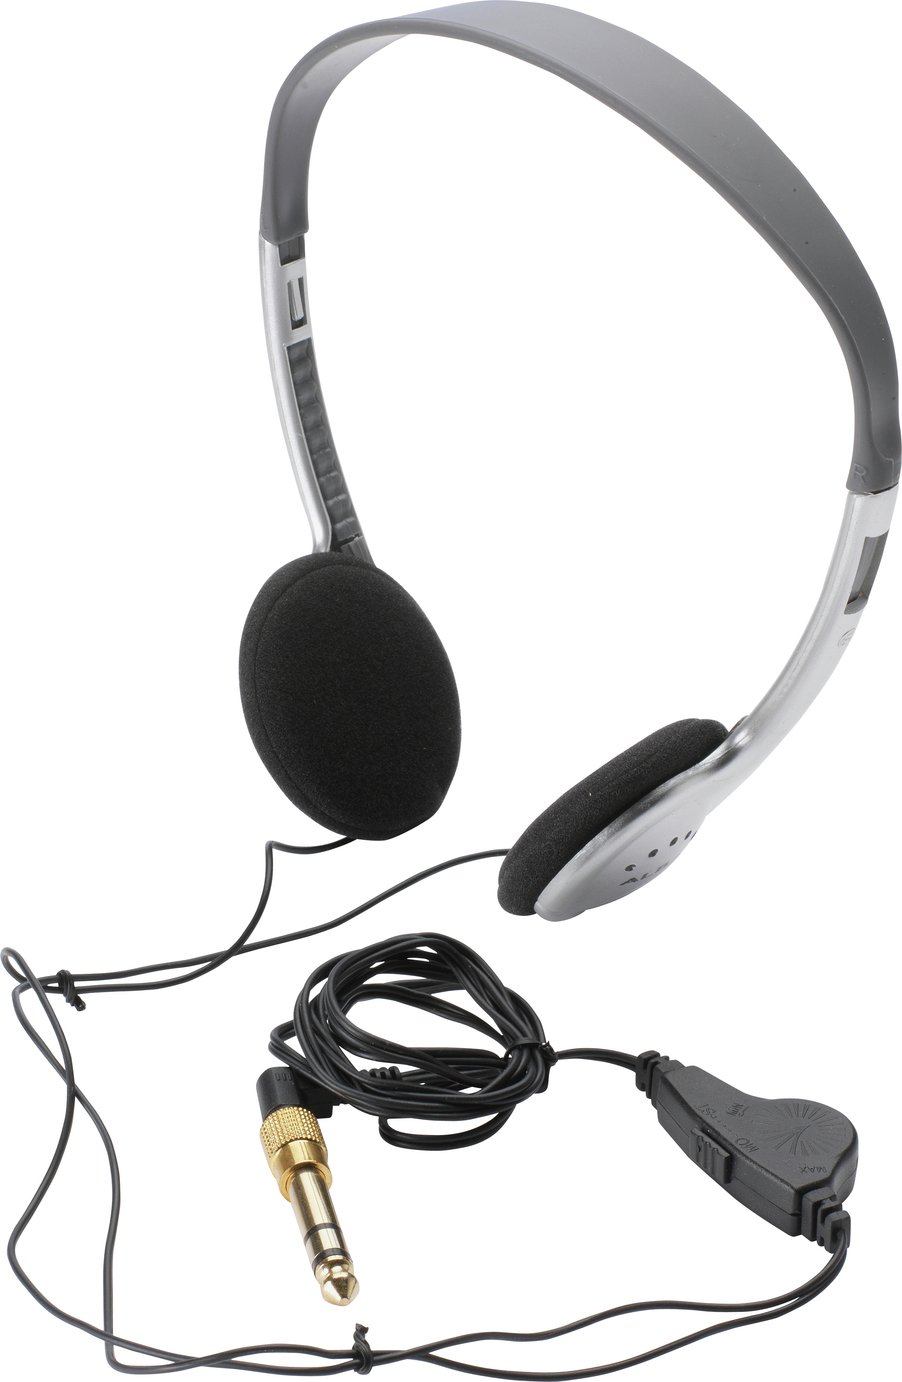 Alba On-Ear Headphones Review